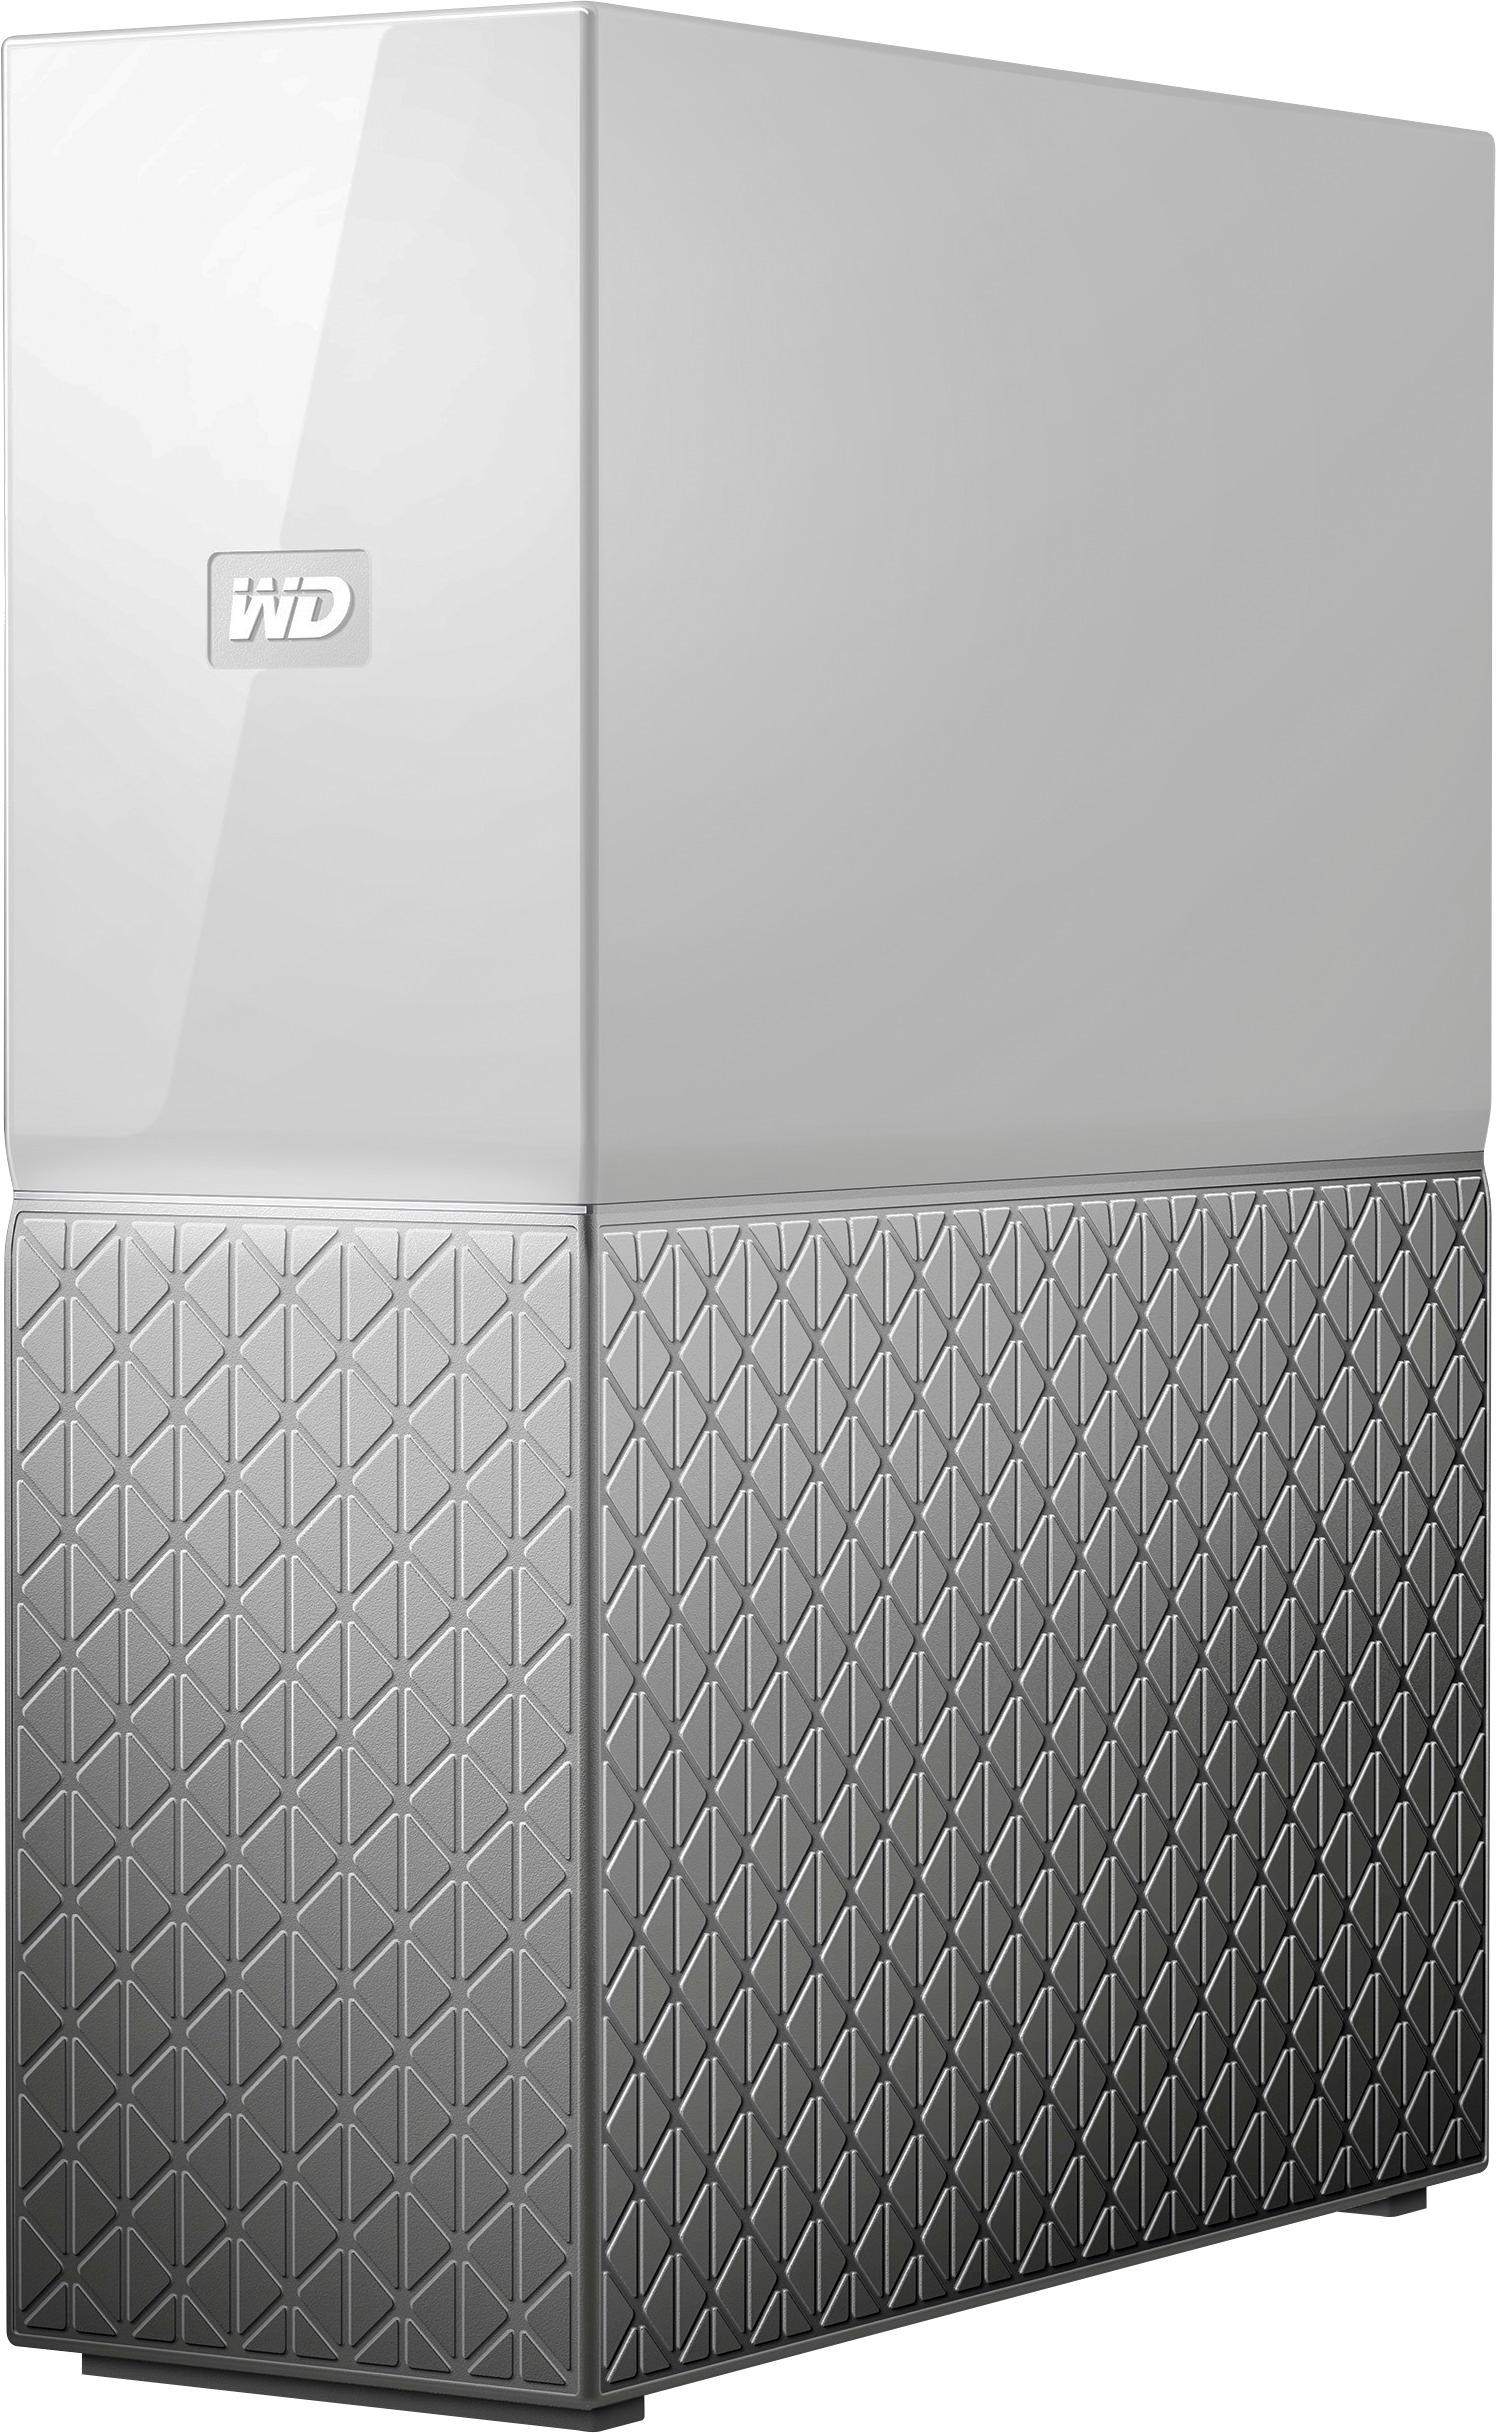 Angle View: WD - Blue 500GB Internal SATA Hard Drive for Desktops